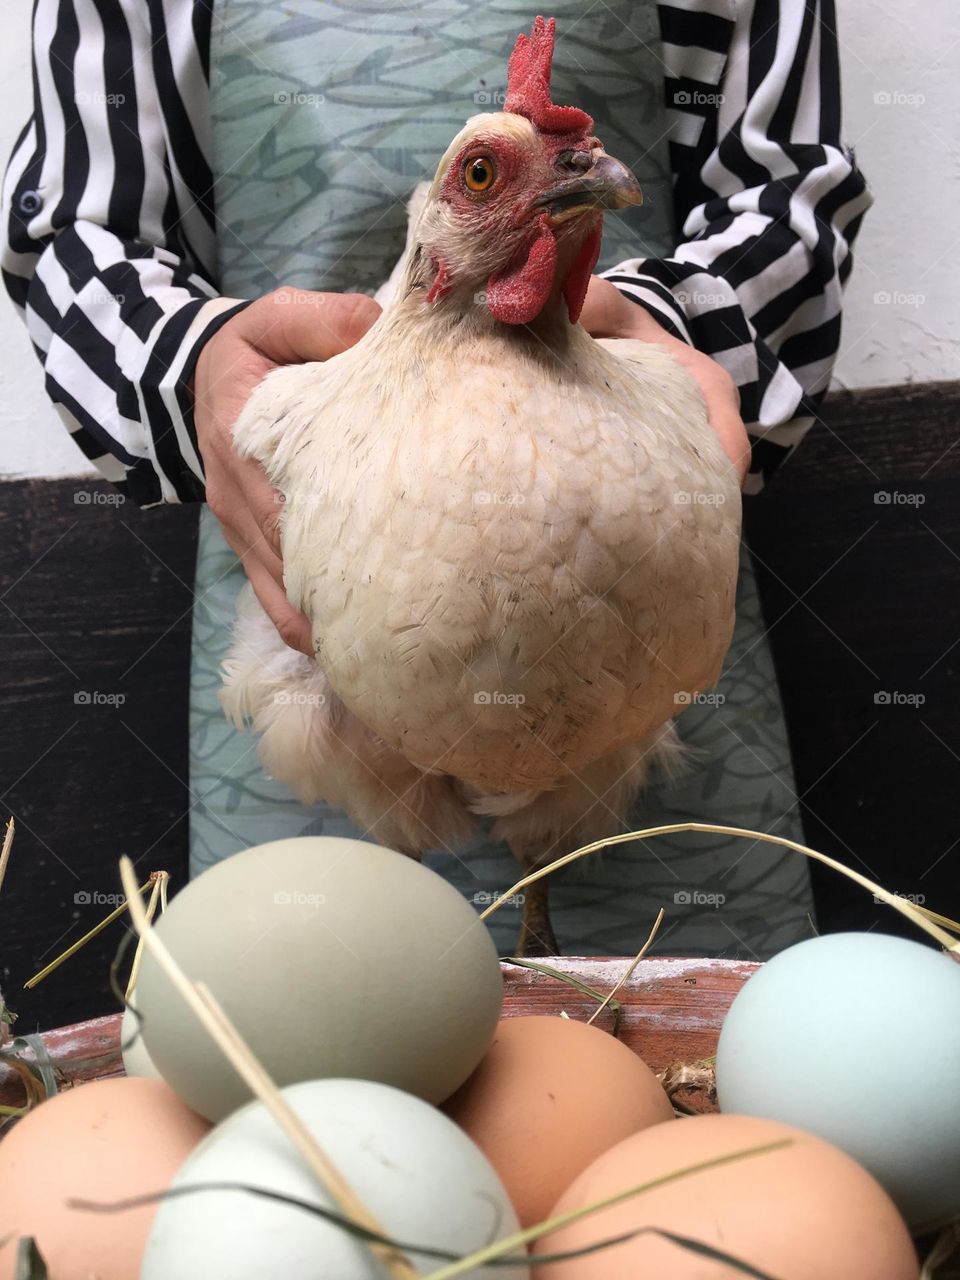 Eggs. 